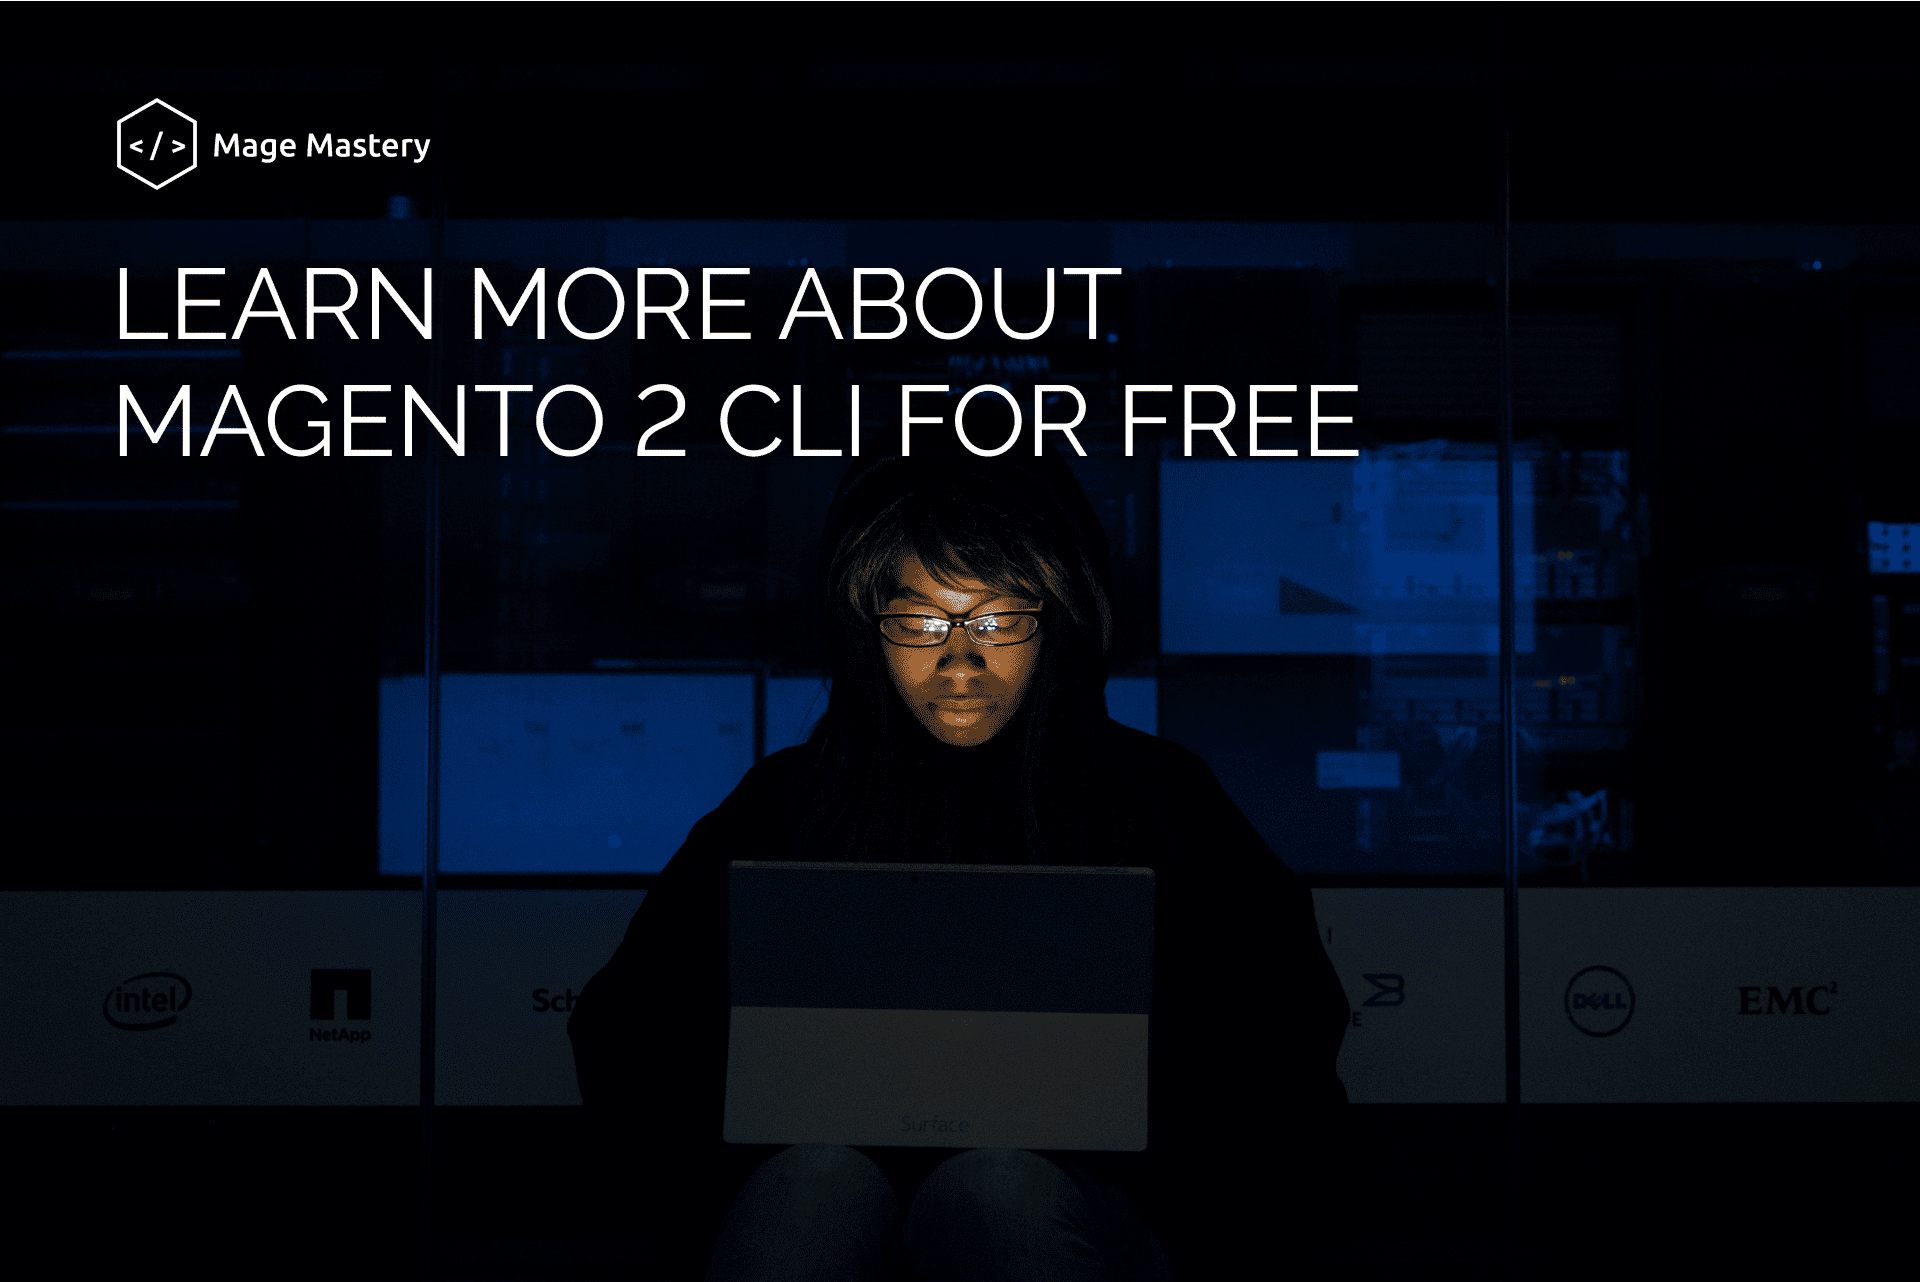 Magento CLI course for free!